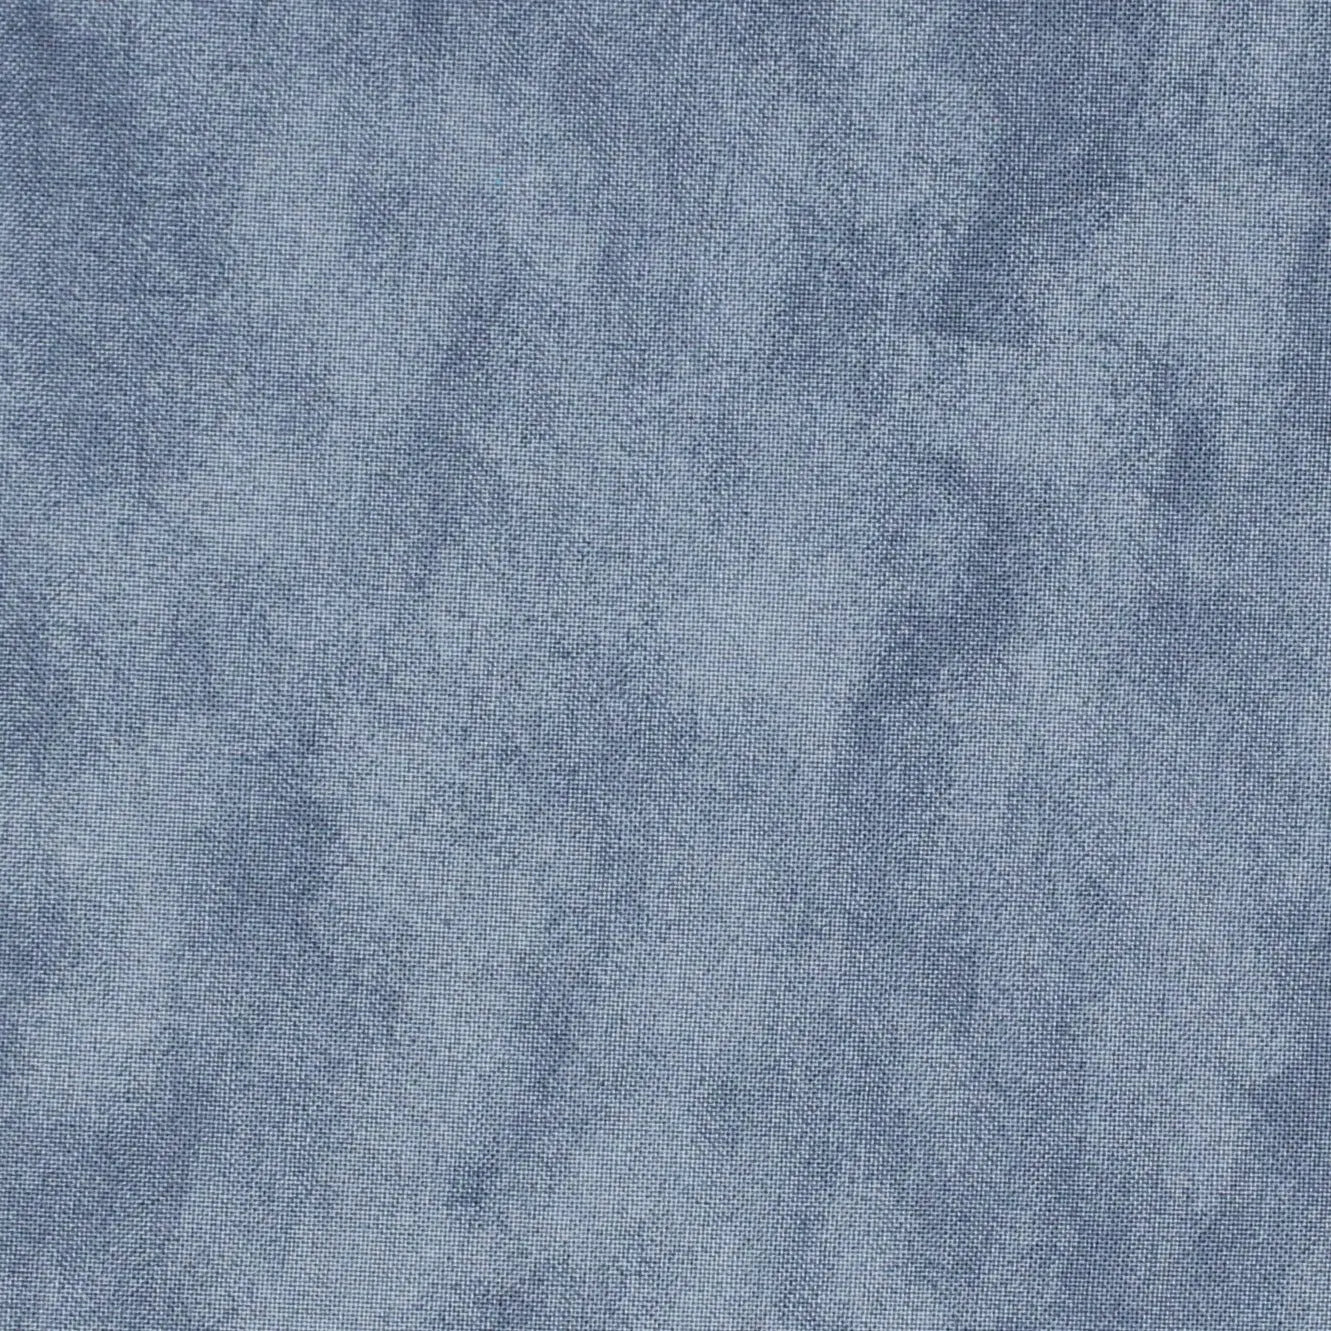 Grey Dark Color Waves Cotton Wideback Fabric Per Yard - Linda's Electric Quilters